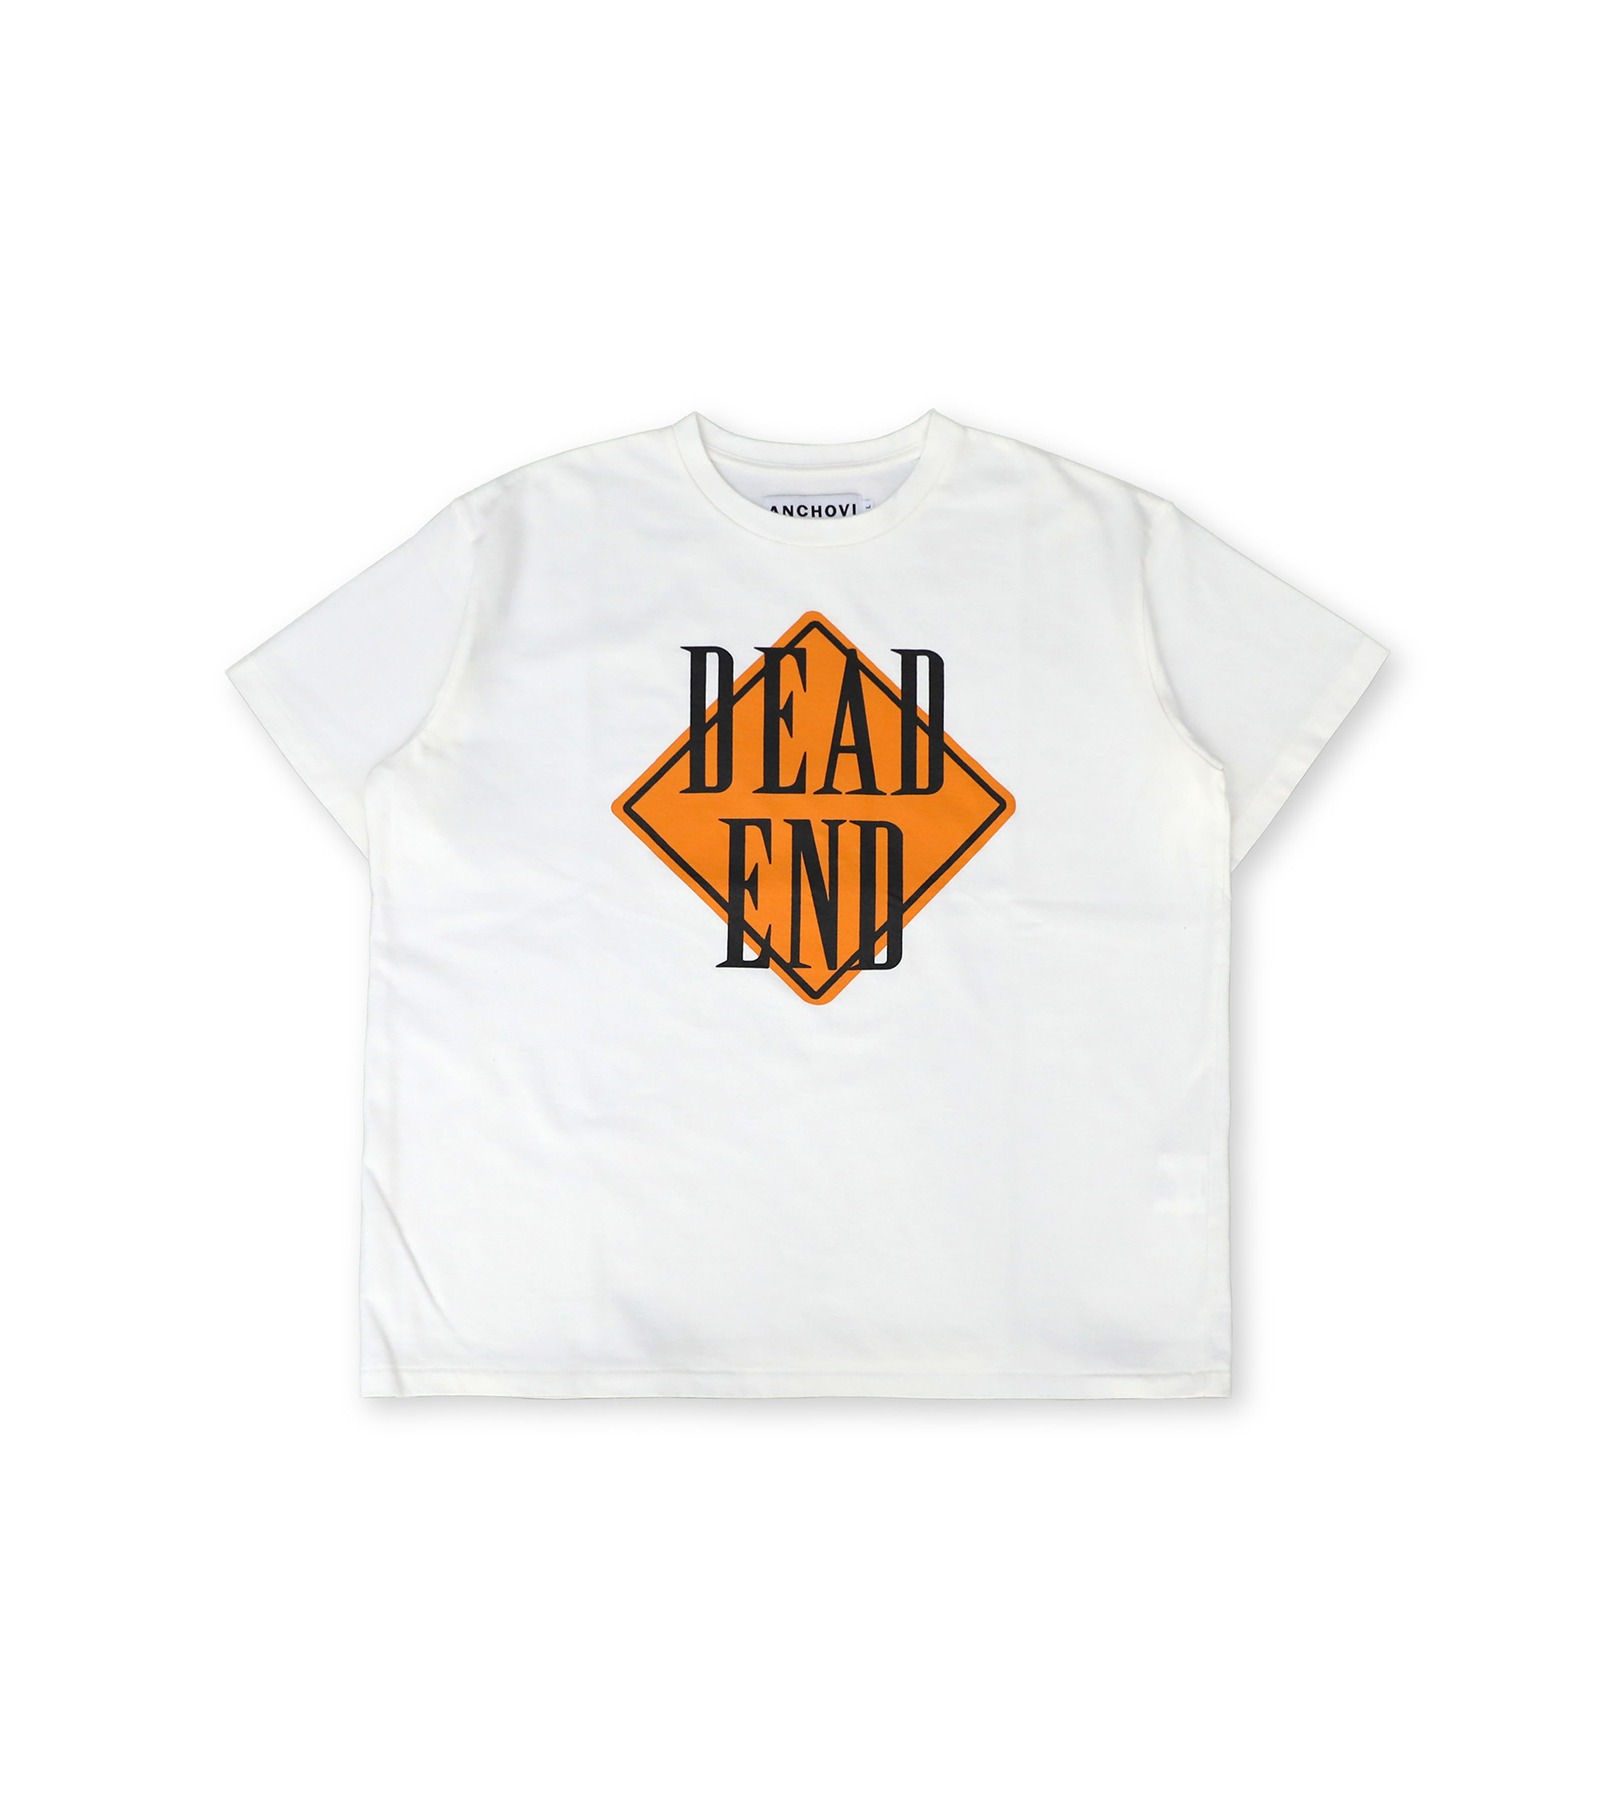 Dead End T-shirt (White)